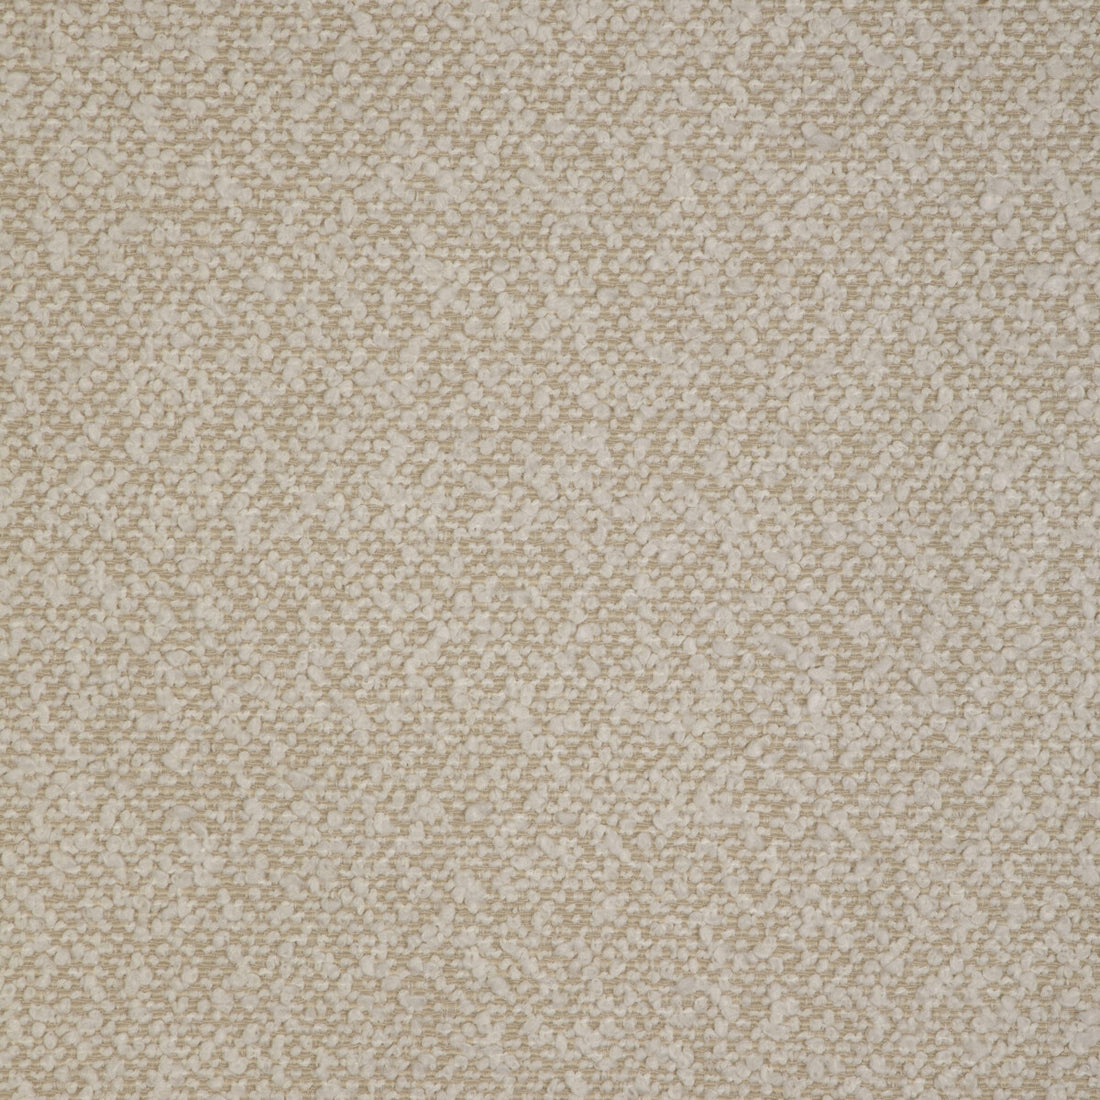 Kravet Smart fabric in 37001-116 color - pattern 37001.116.0 - by Kravet Smart in the Performance Kravetarmor collection